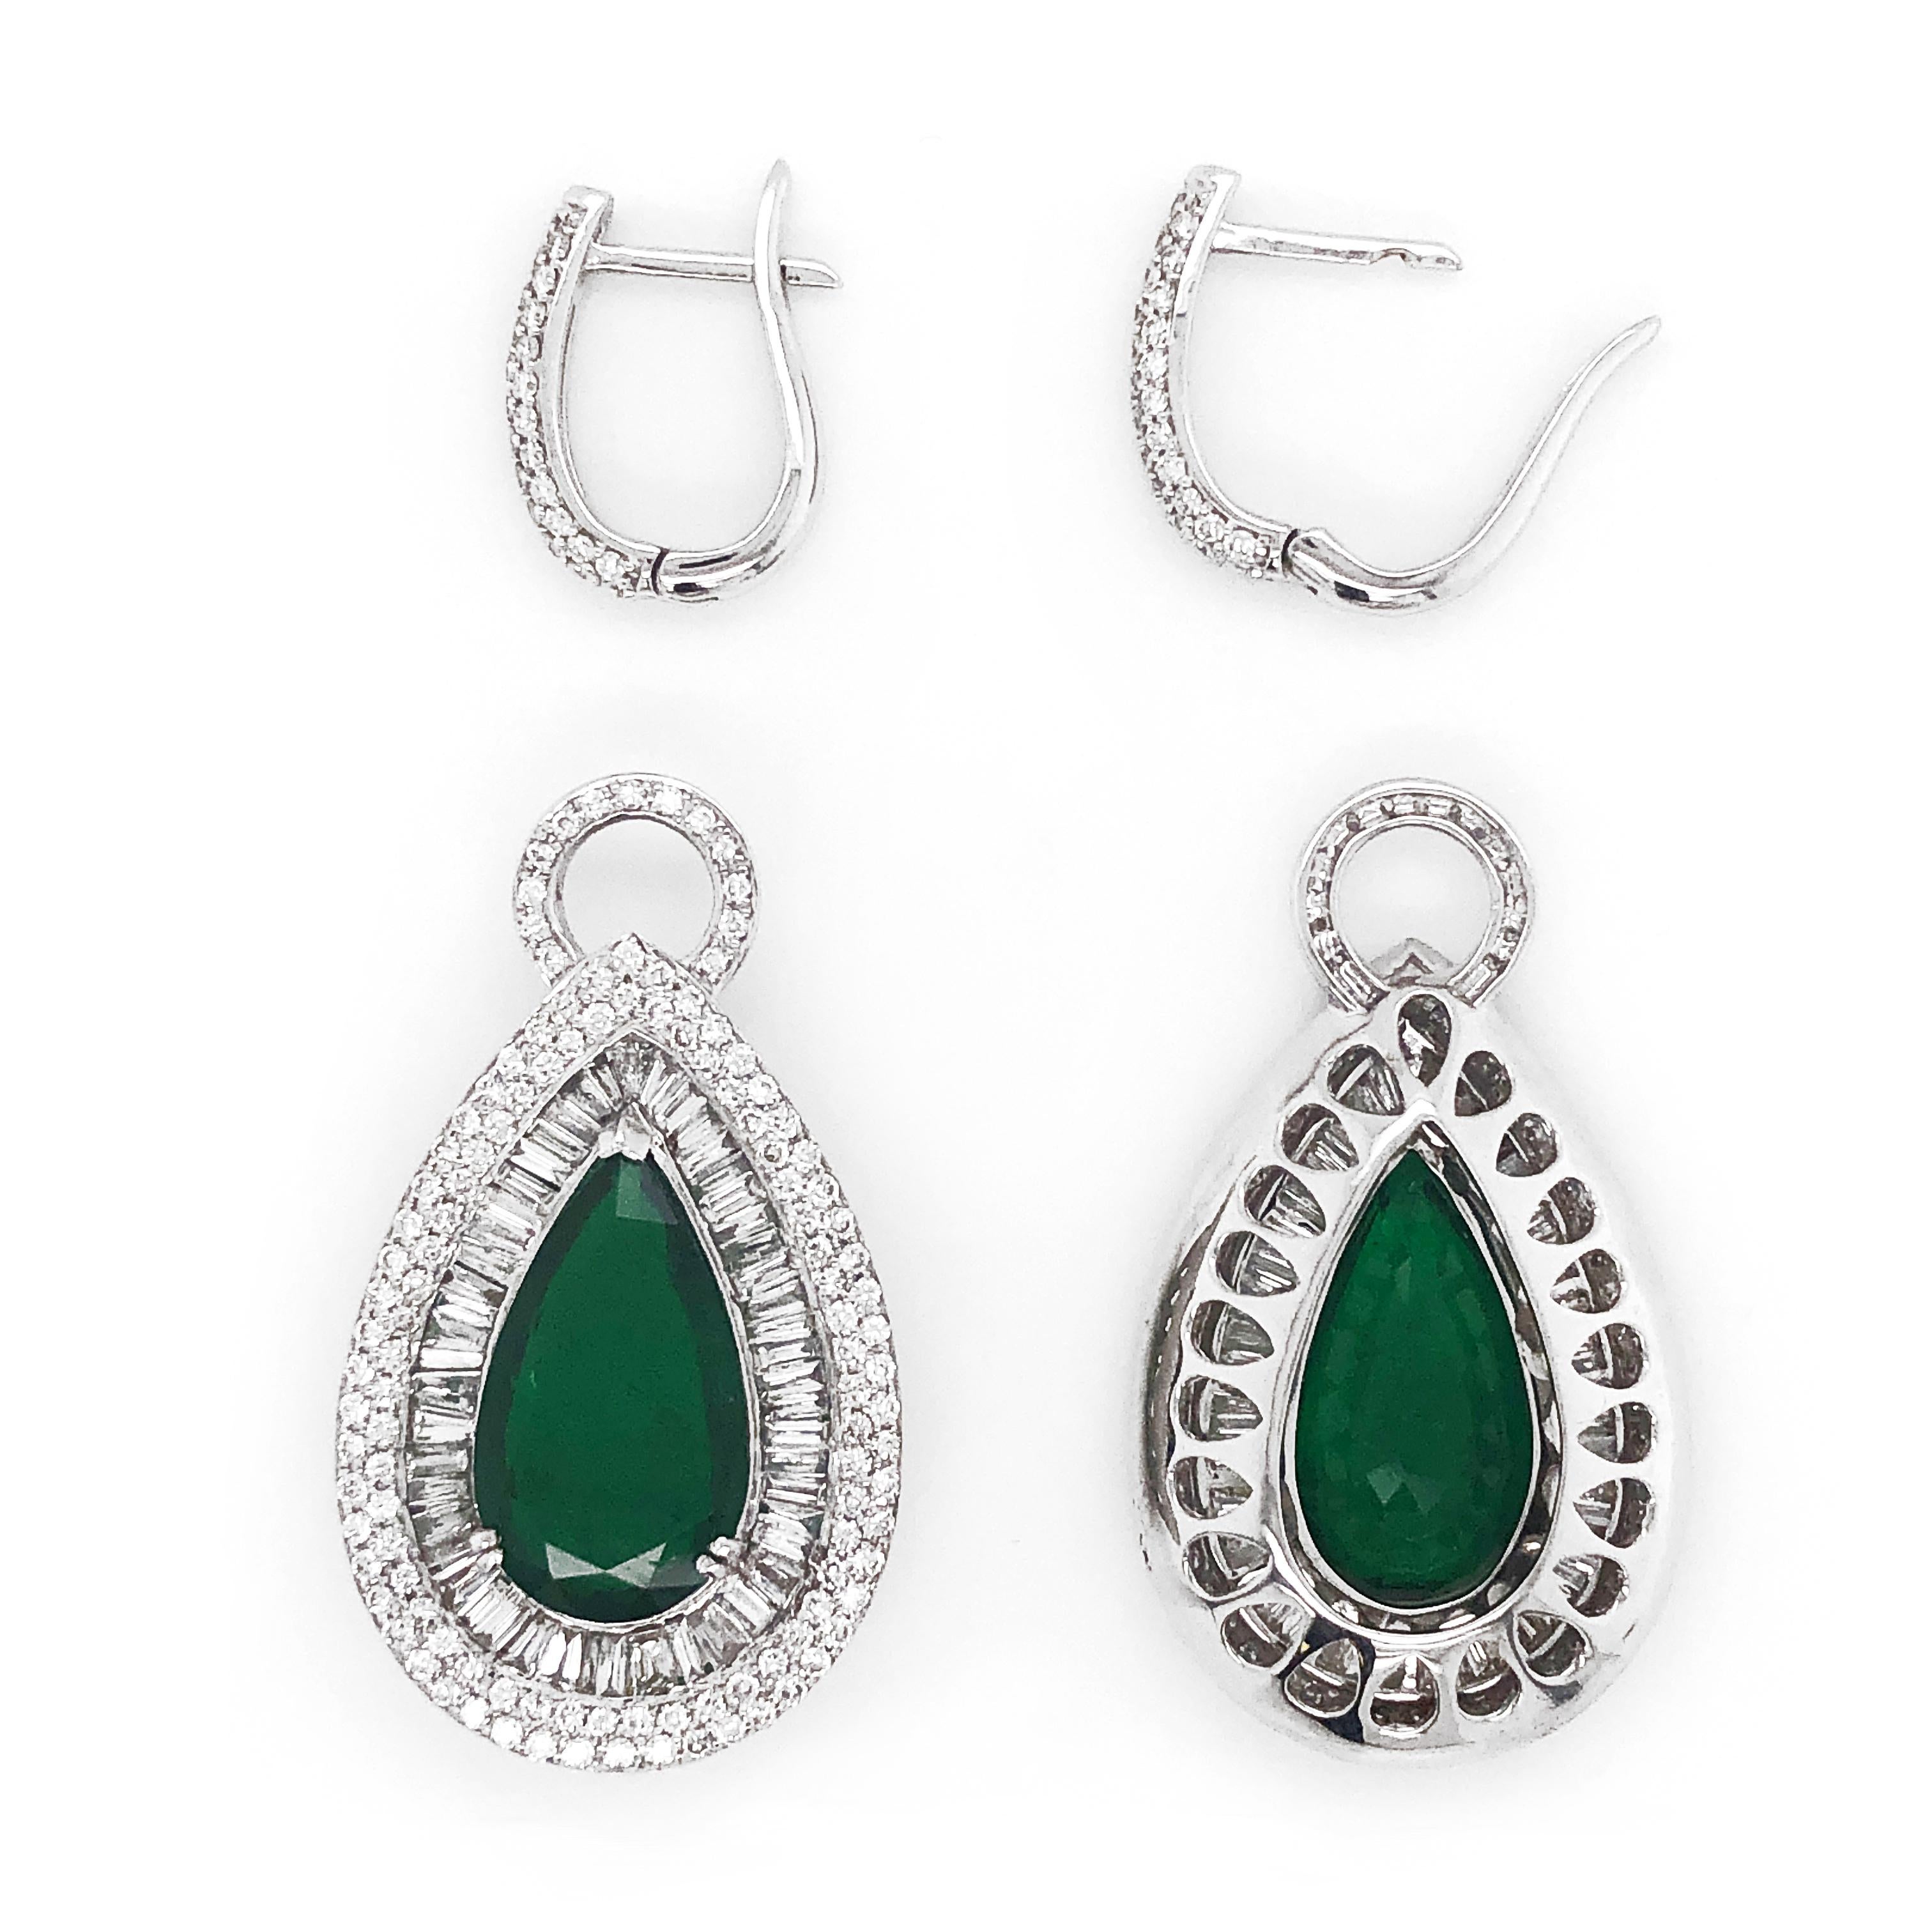 Zambian Pear Cut Emeralds 13.52 Carat Diamonds 7.58 Carat 18 Karat Earrings In New Condition For Sale In New York, NY